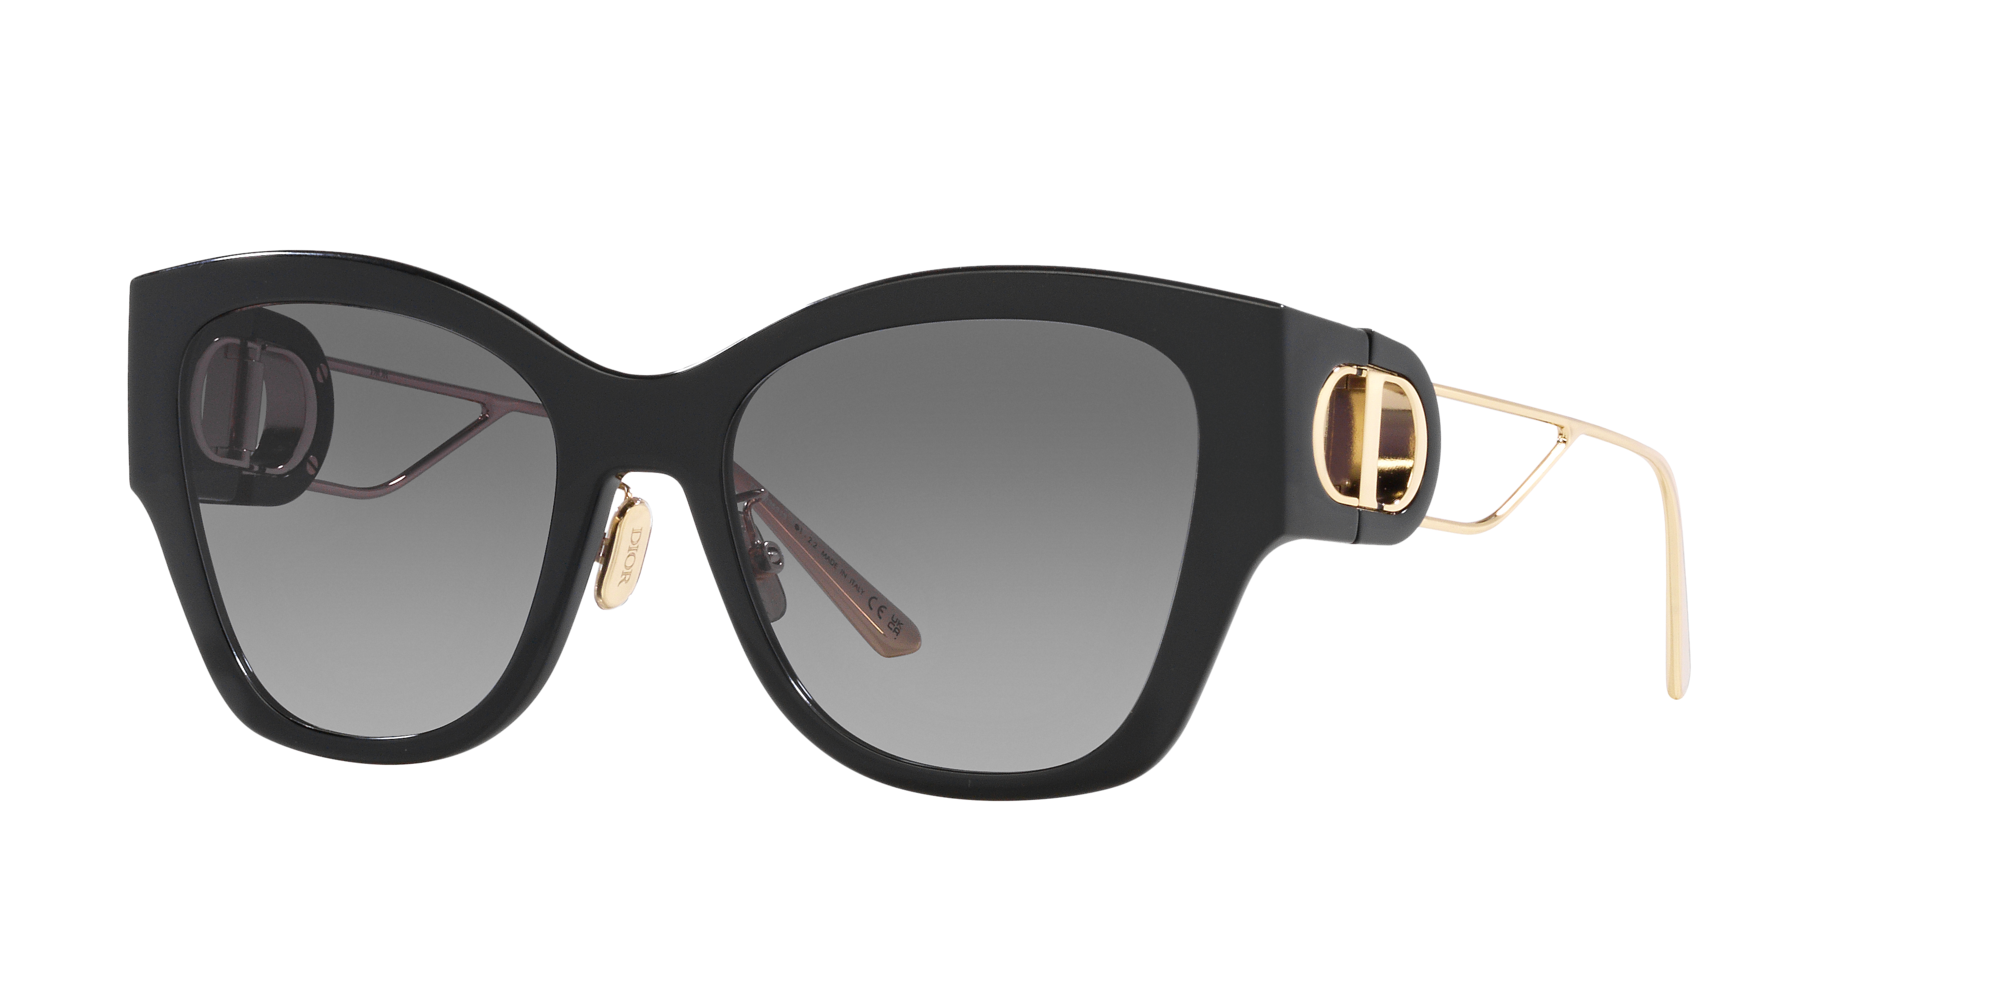 30 Montaigne SU Sunglasses in Grey  Dior Eyewear  Mytheresa